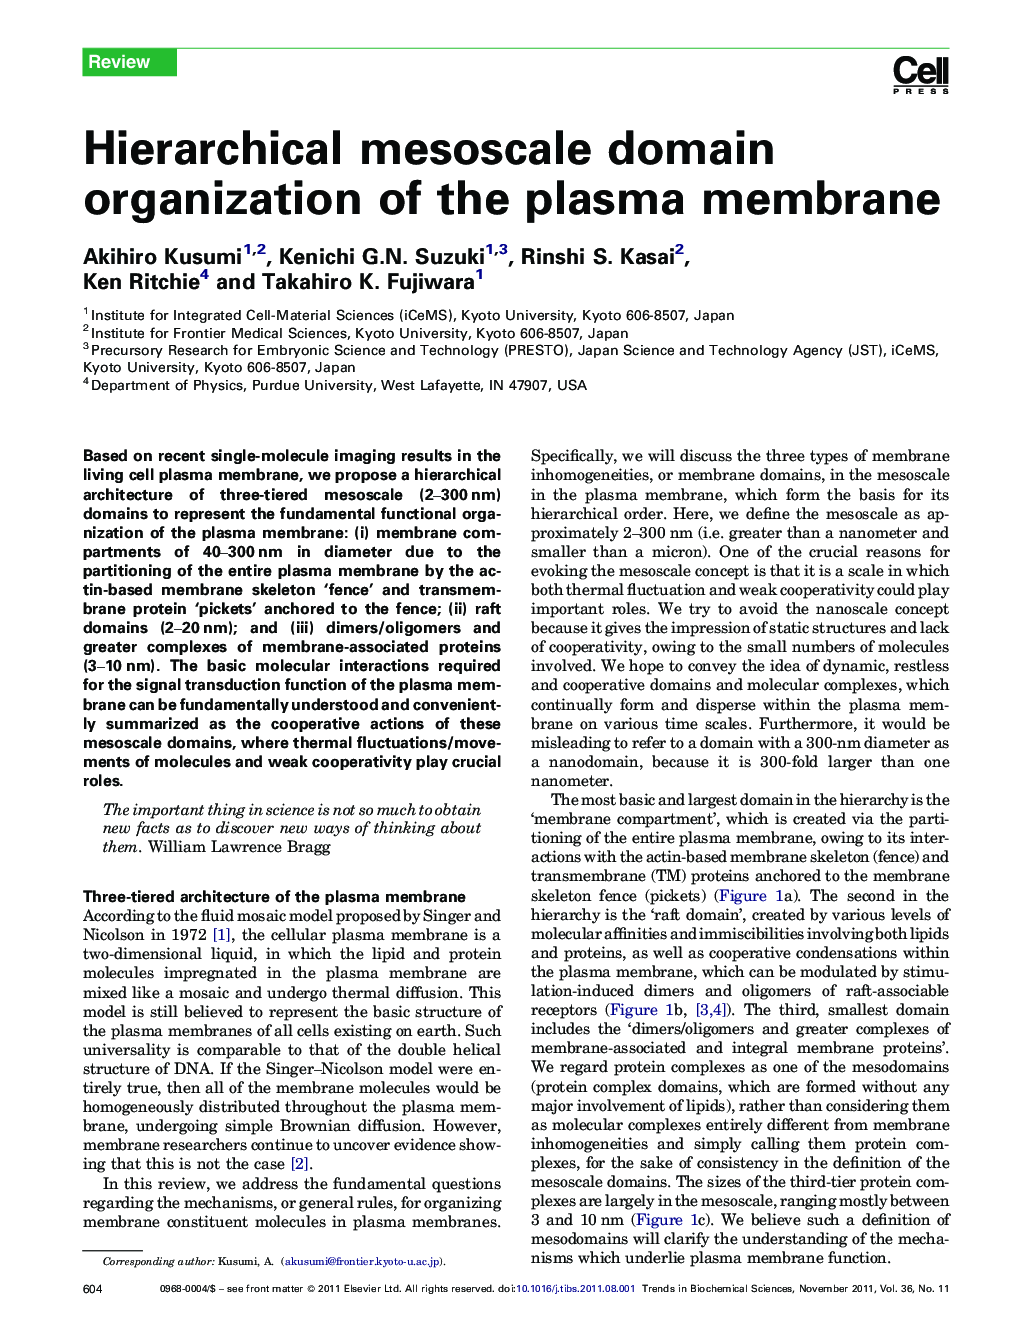 Hierarchical mesoscale domain organization of the plasma membrane